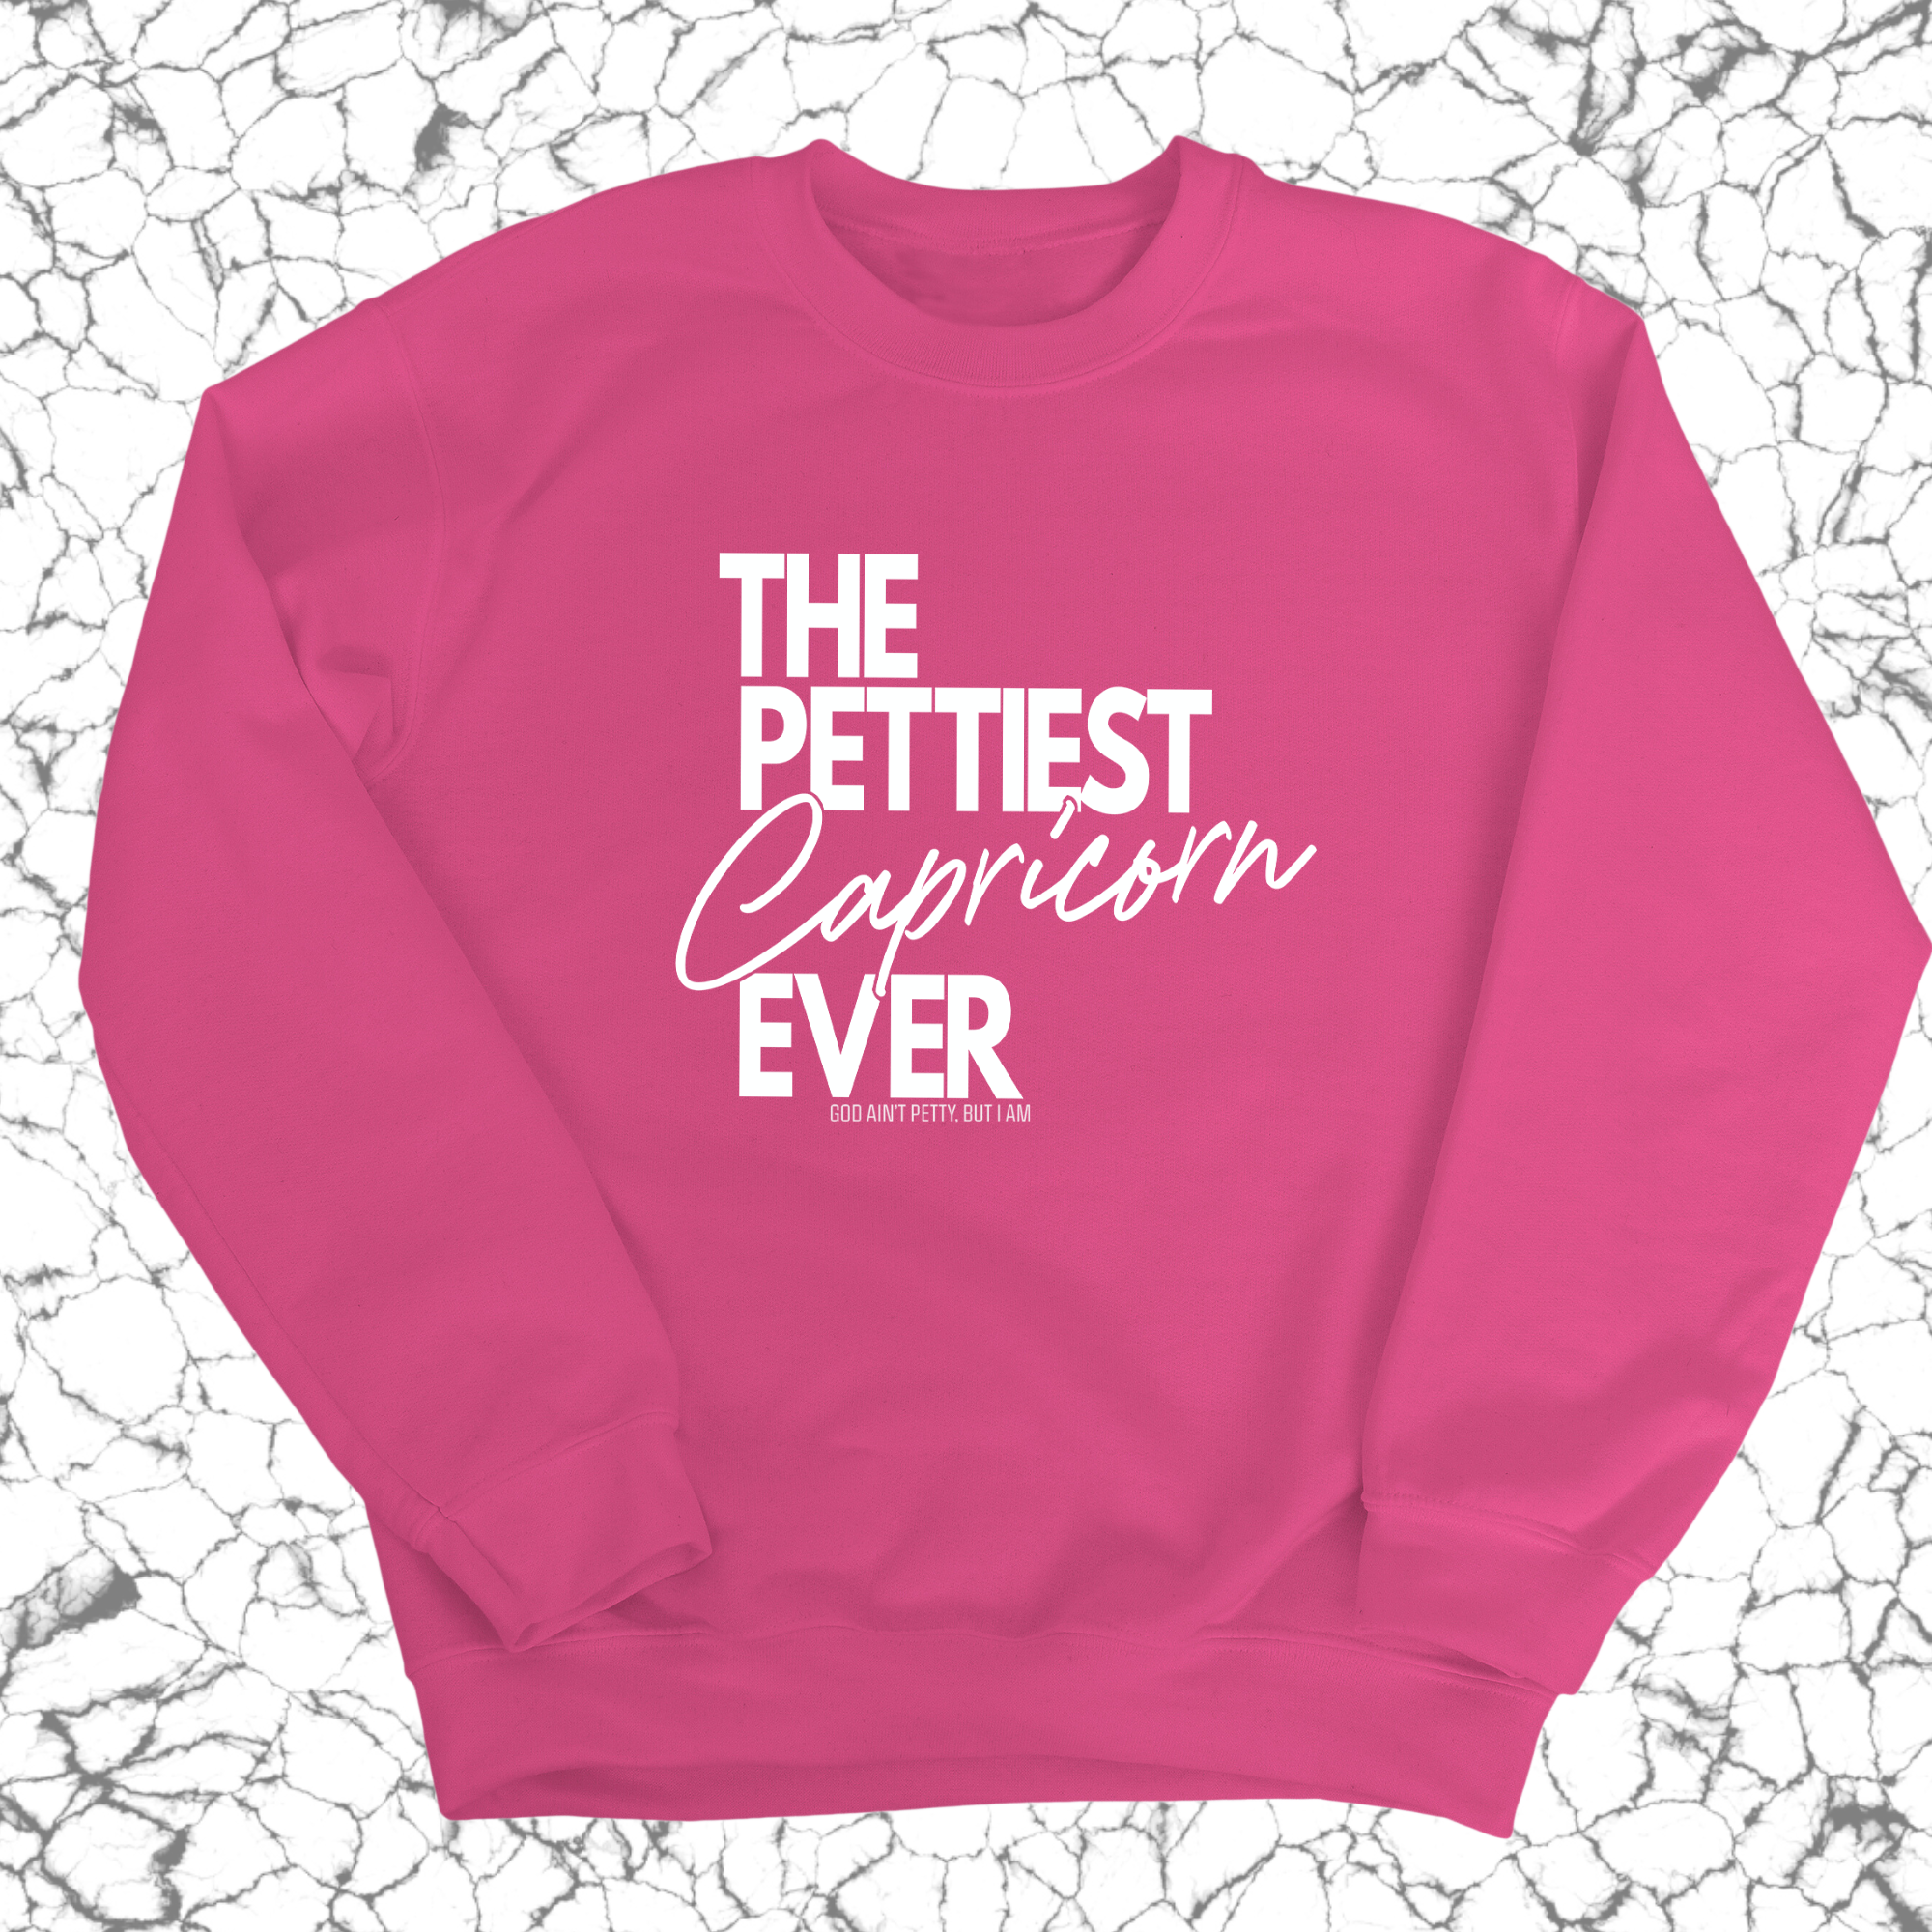 The Pettiest Capricorn Ever Unisex Sweatshirt-Sweatshirt-The Original God Ain't Petty But I Am